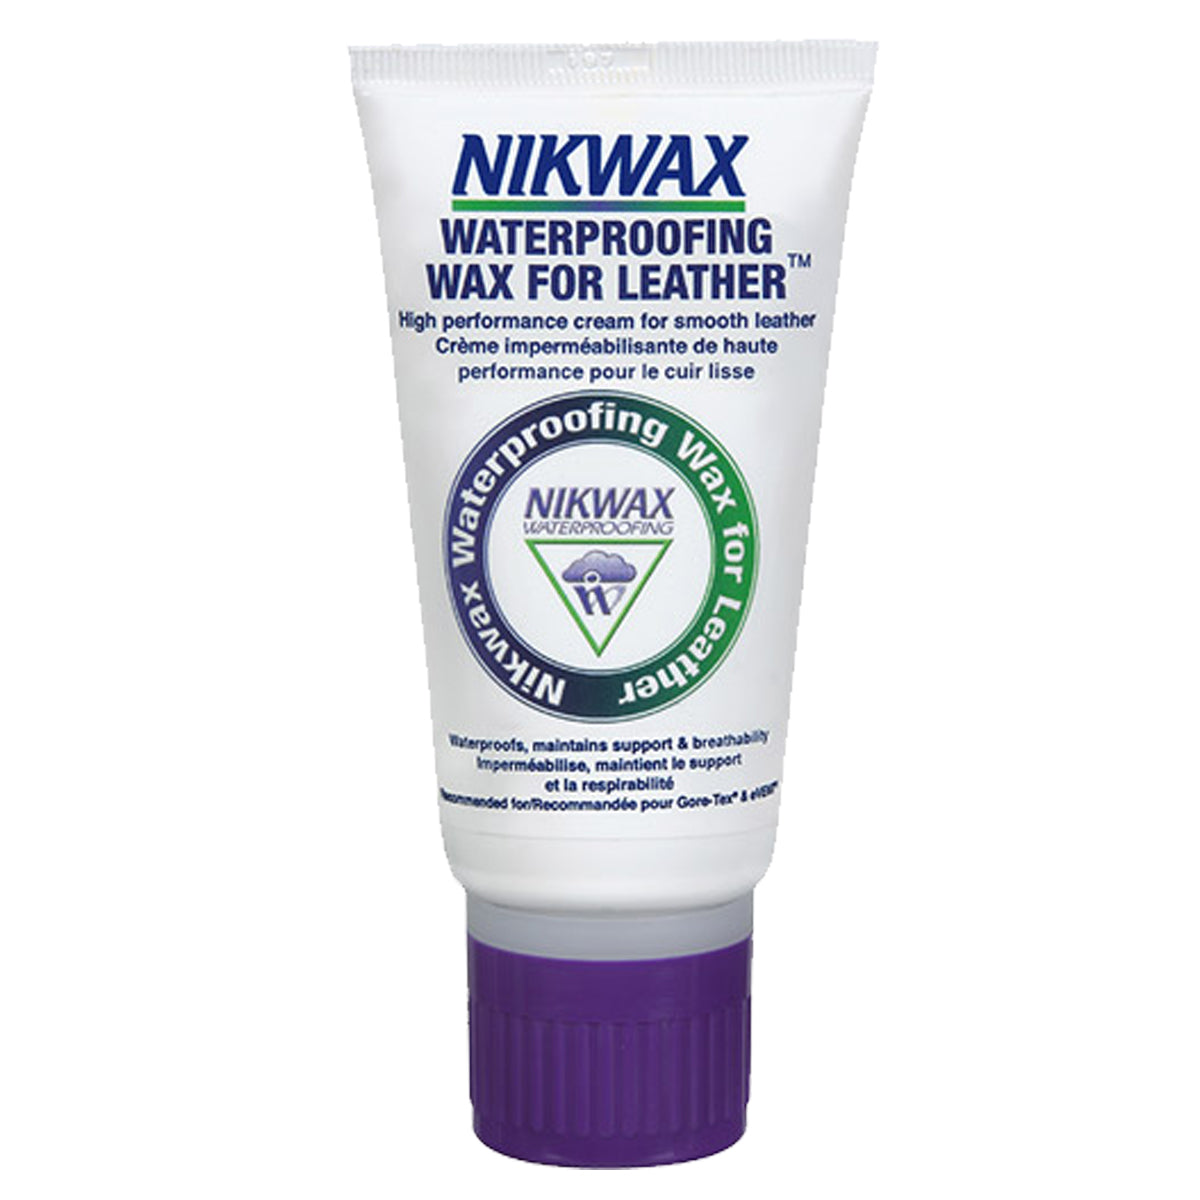 Nikwax Waterproofing Wax For Leather in  by GOHUNT | Nikwax - GOHUNT Shop